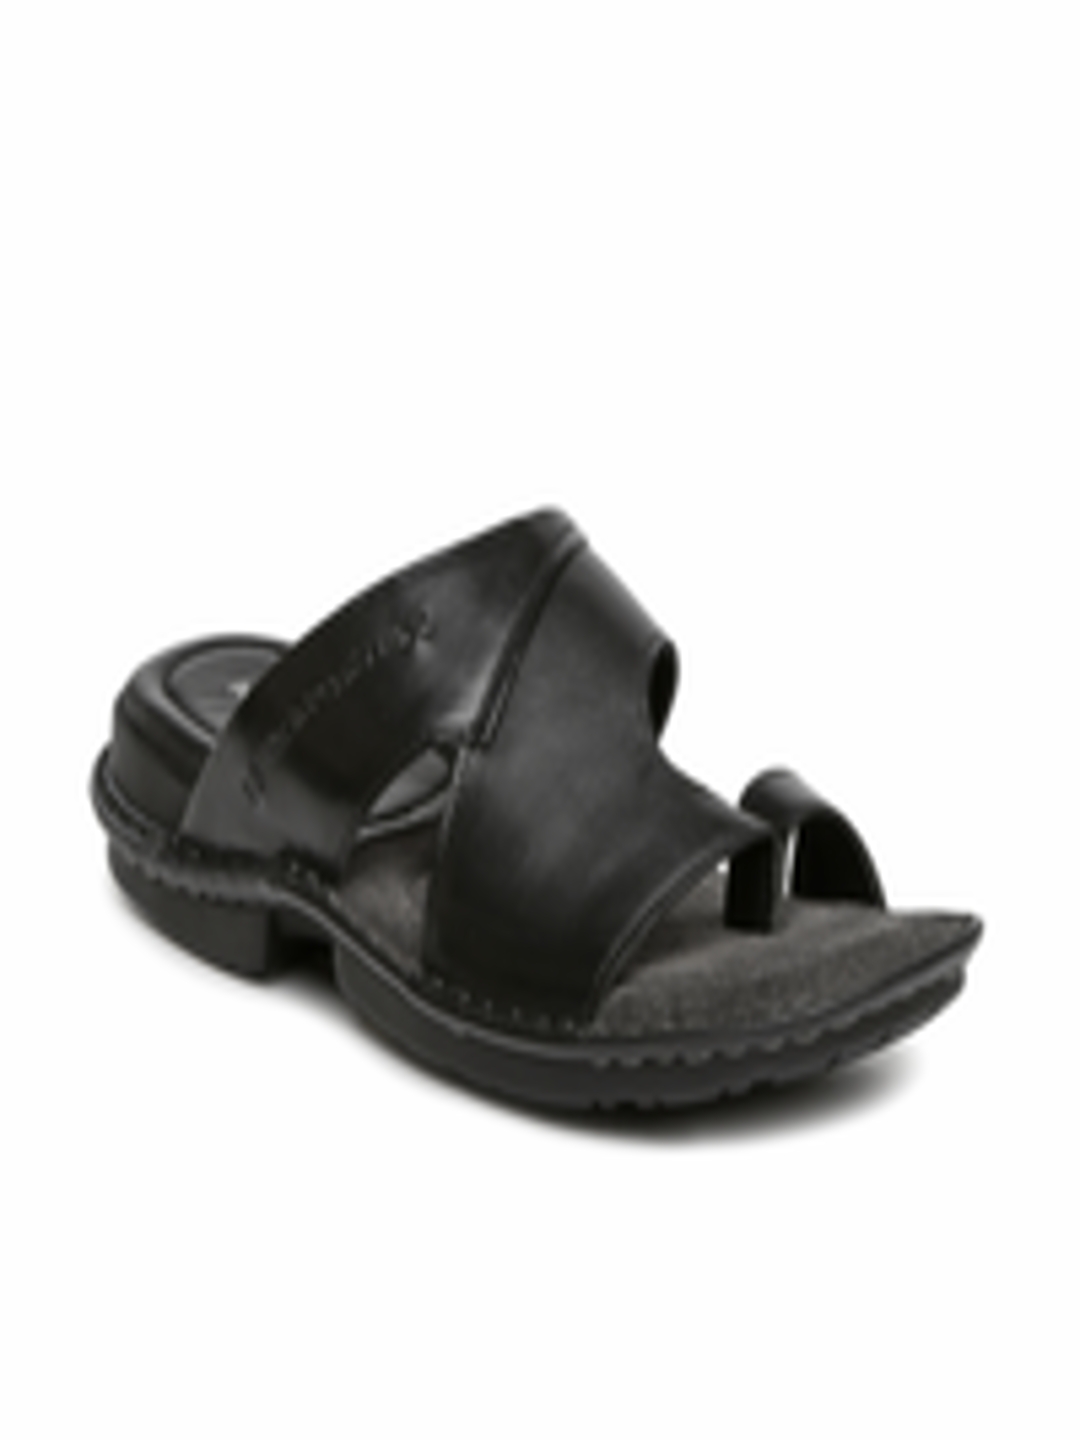 Buy Hush Puppies Men Black Leather Sandals - Sandals for Men 1610122 ...